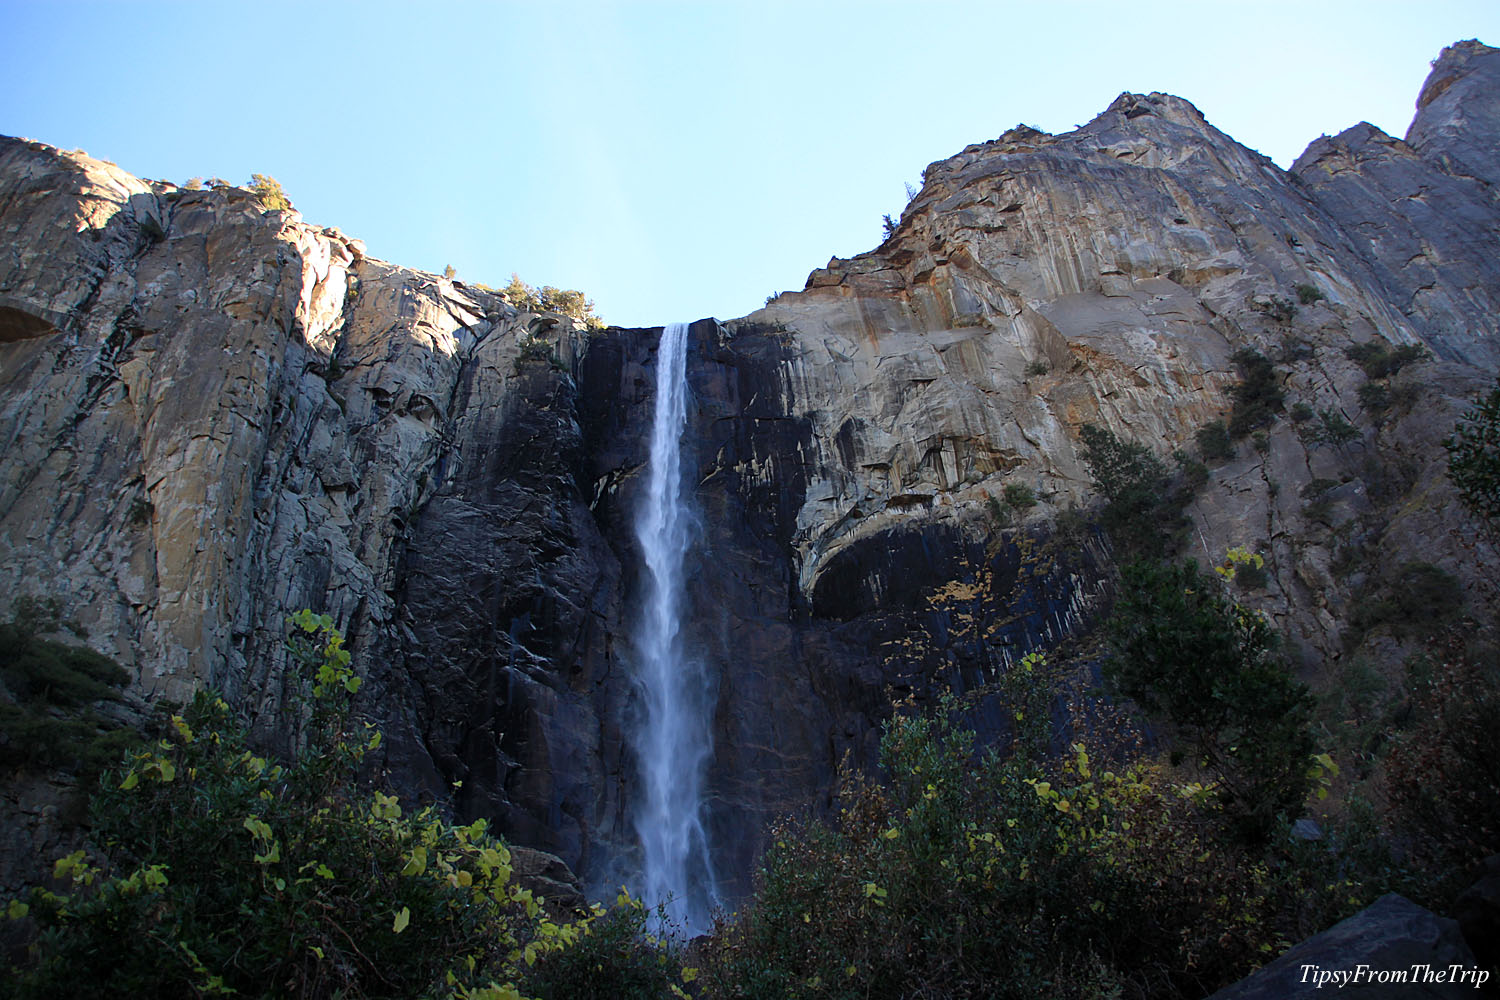 Bridal Veil Fall from Yosemite Valley